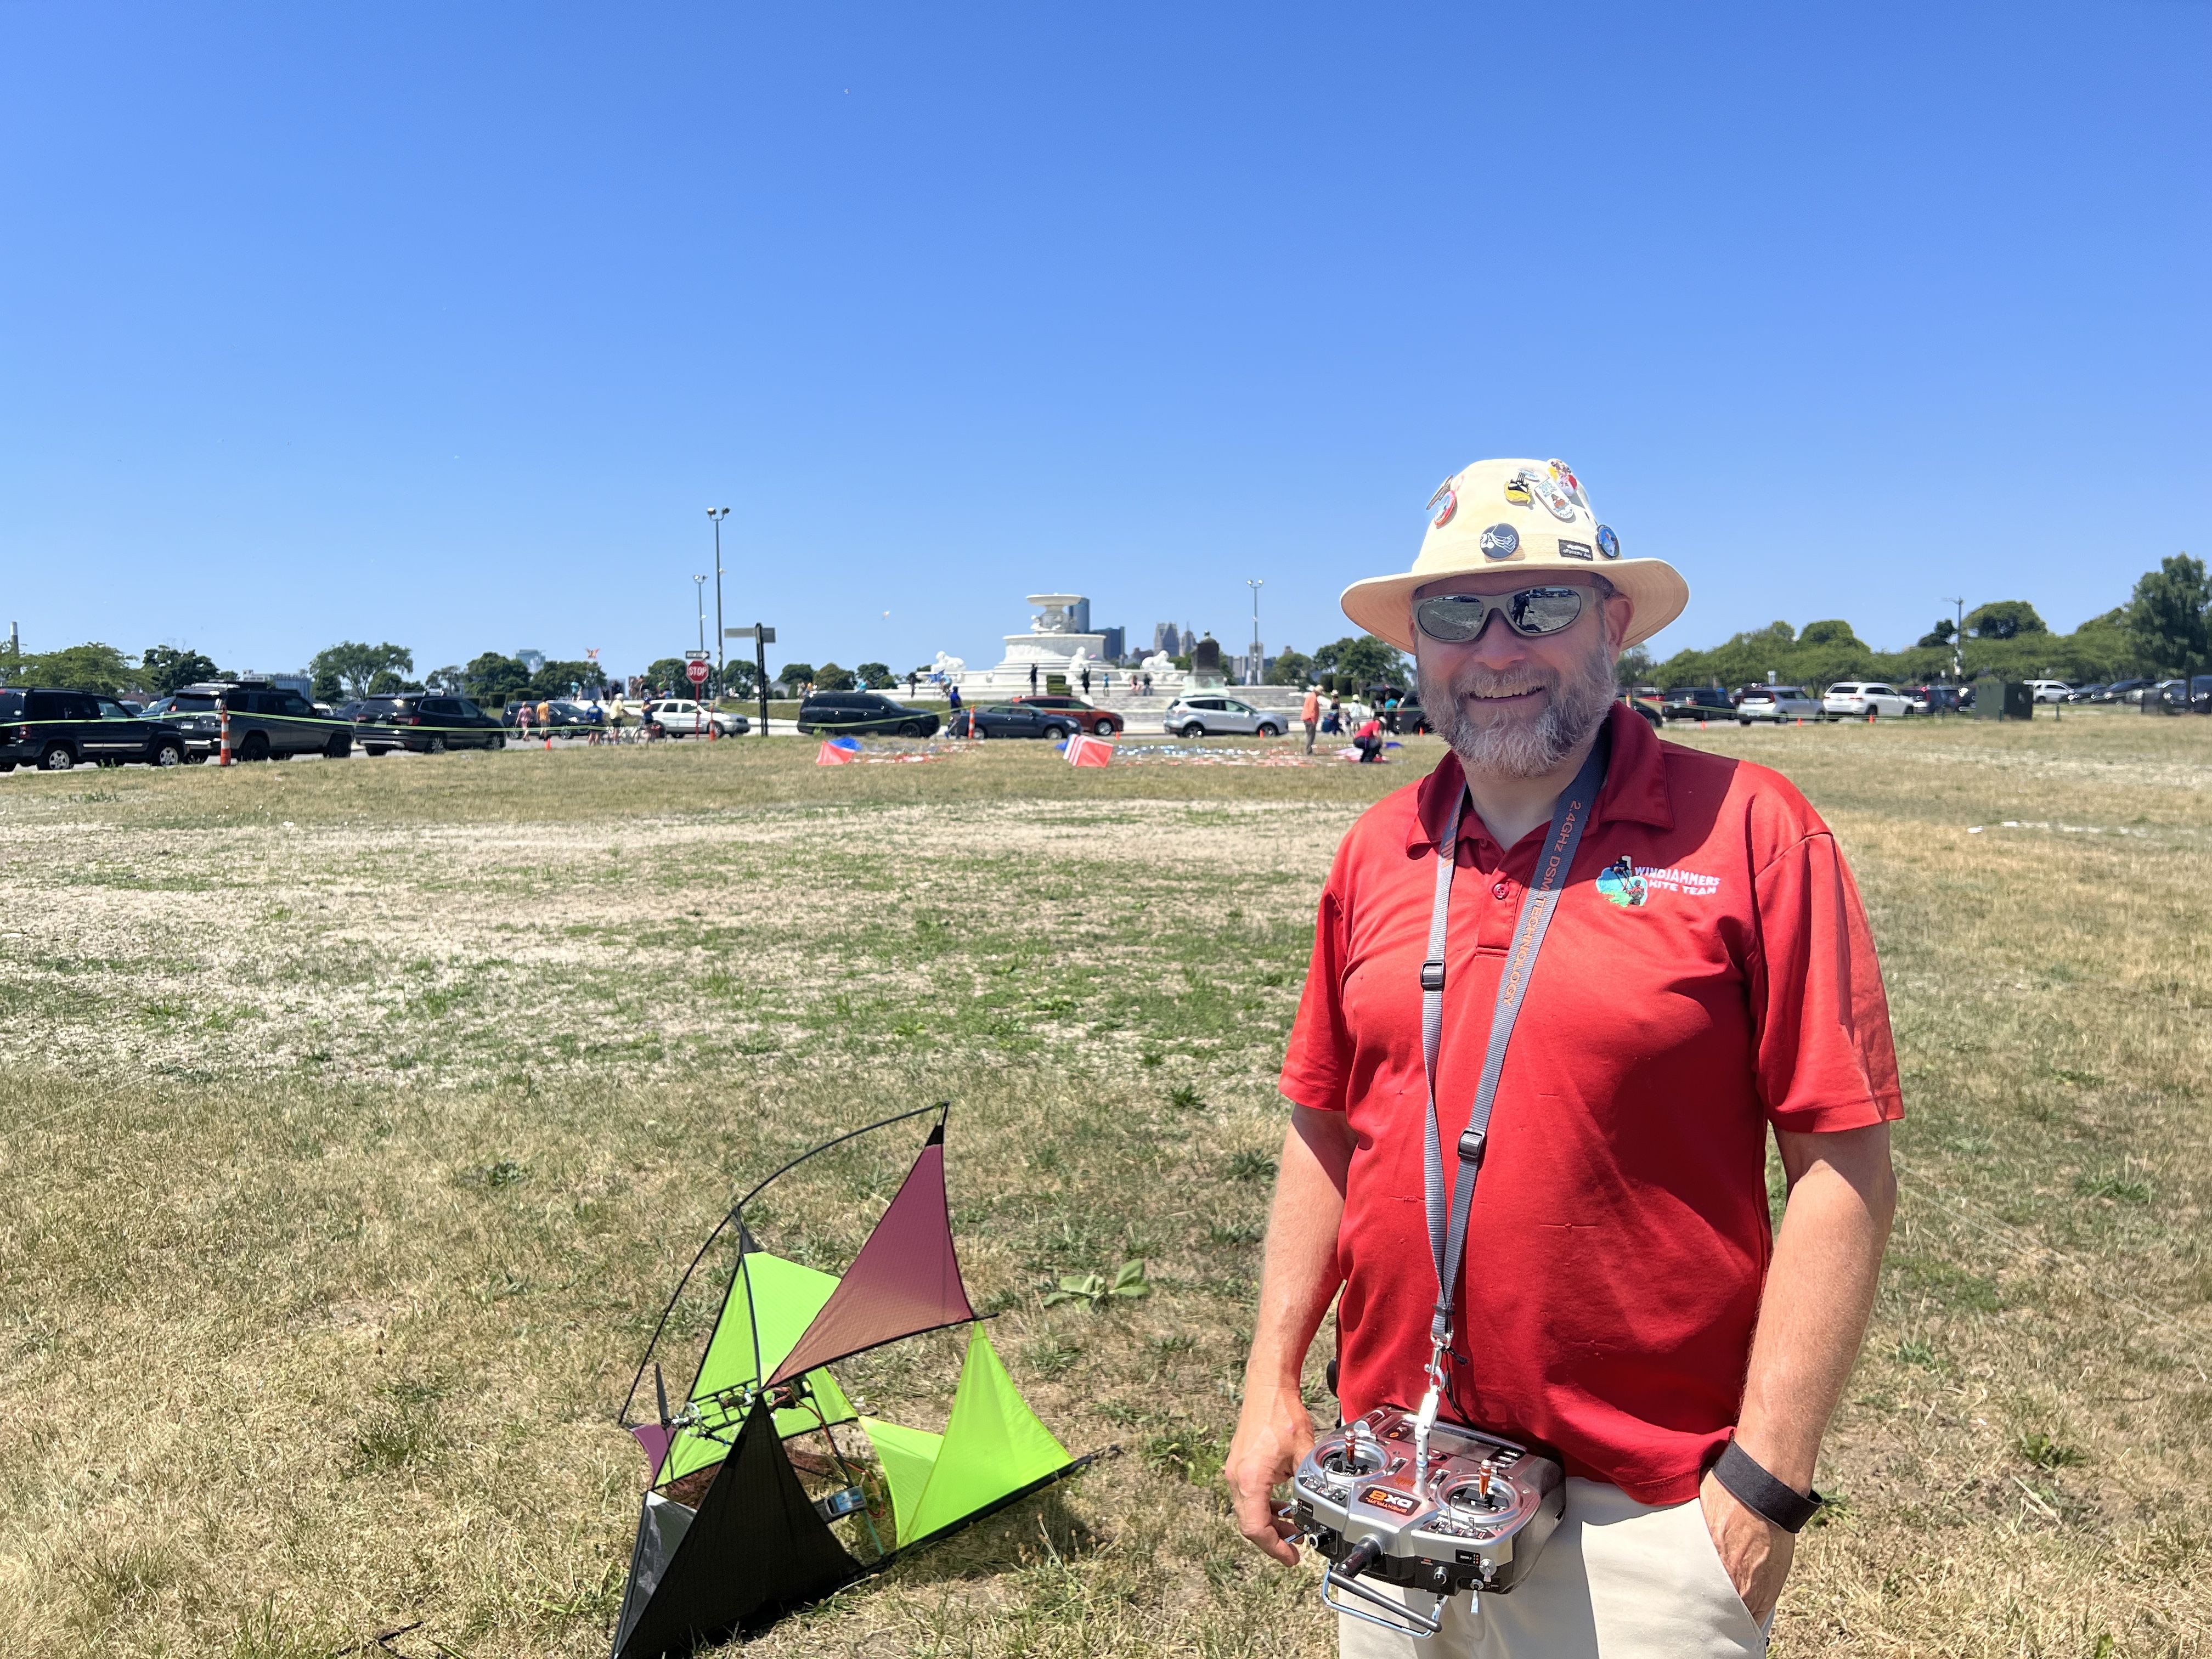 Jon Penn of Detroit Windjammers International Kite Team with his custom gimbal kite designed for flight control. Samuel Robinson/Axios